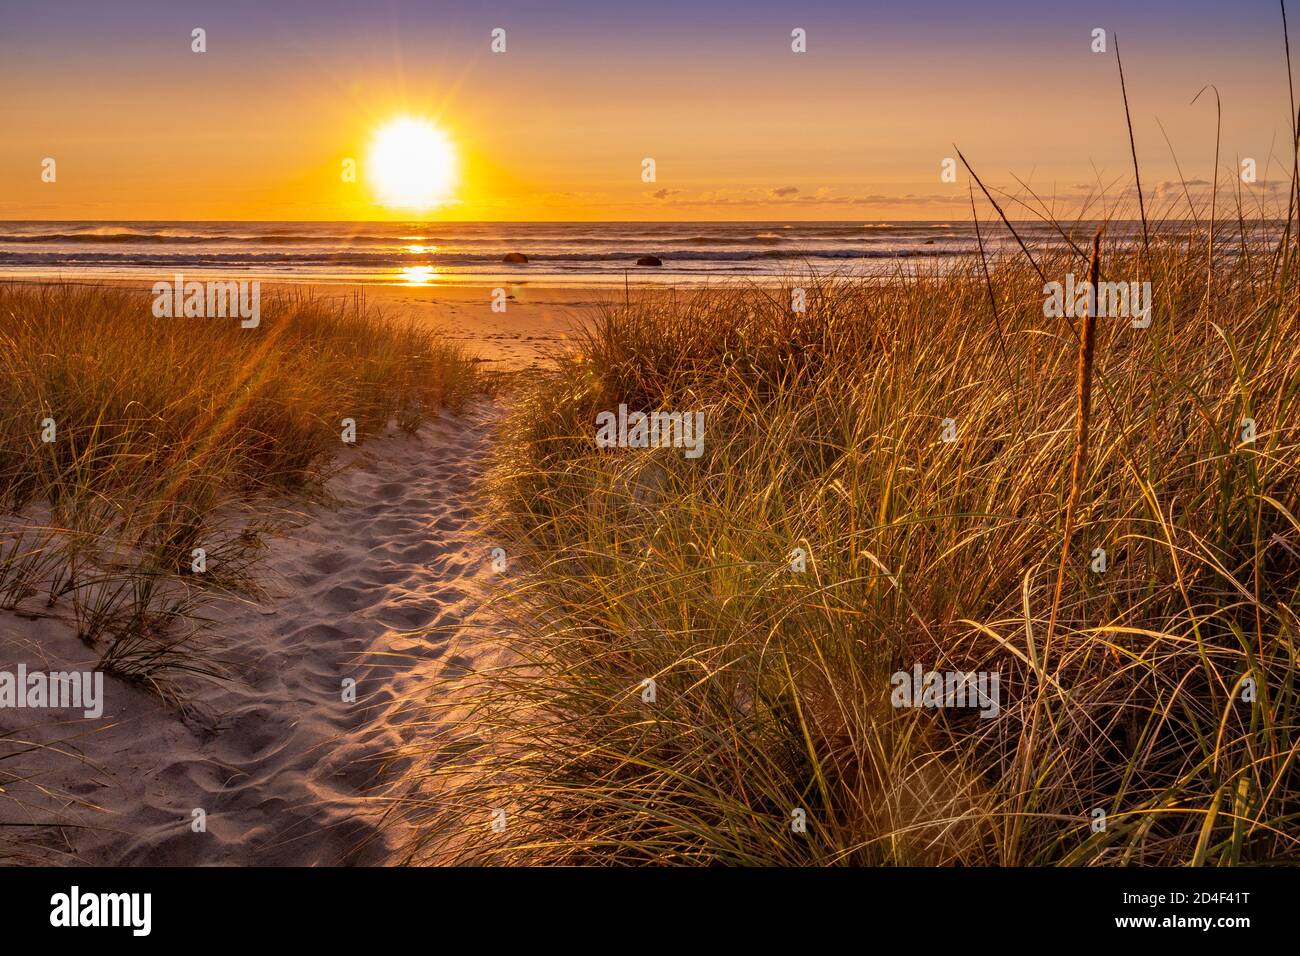 Sunrise with foot path and sand dune grass, Narragansett beach, Rhode Island USA Stock Photo